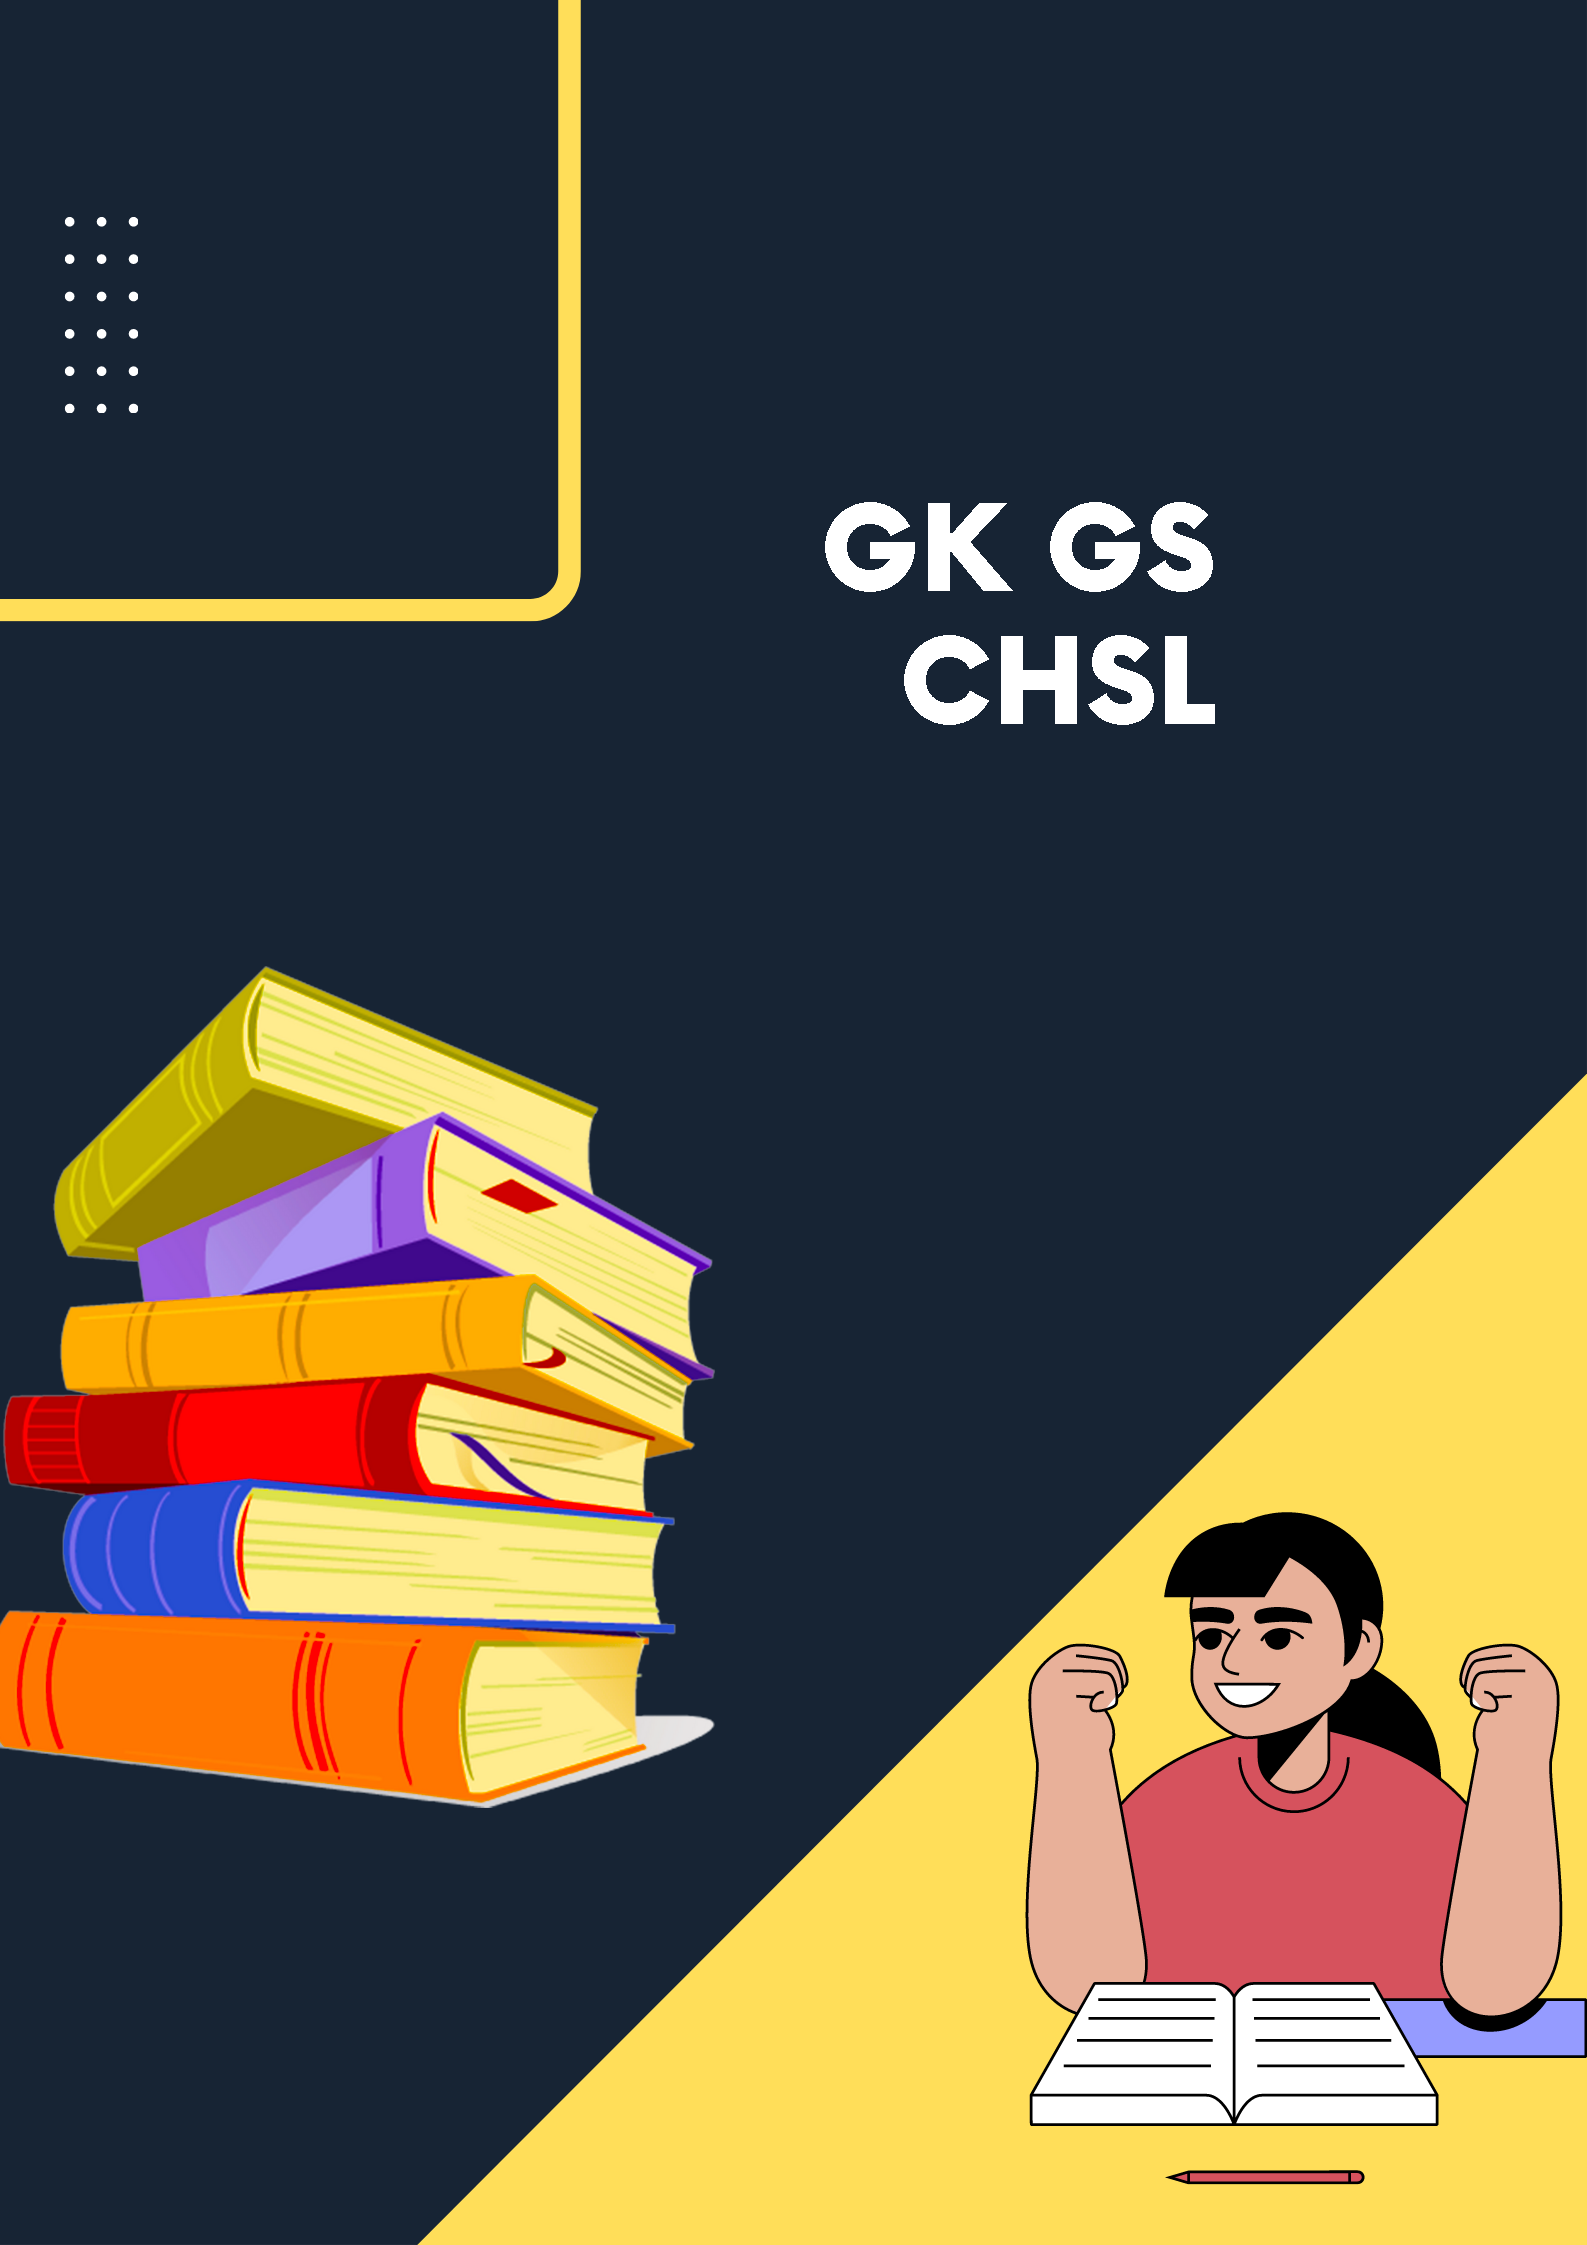 GK GS FOR CHSL